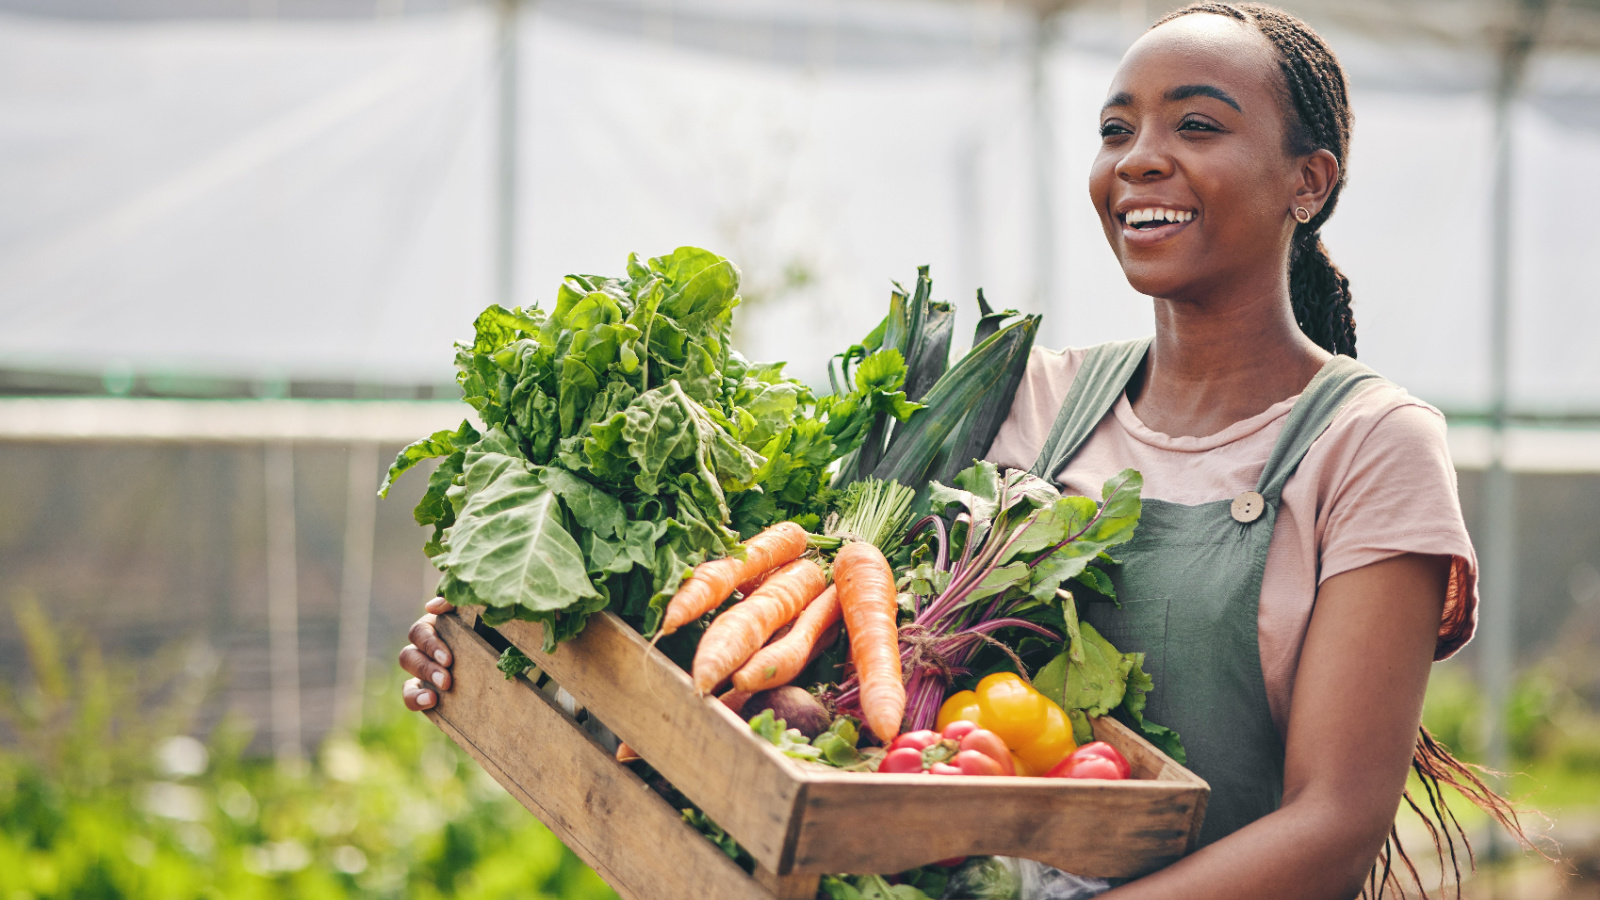 Woman POC Vegetables Healthy Eating Food Farm Job PeopleImages.com Yuri A Shutterstock